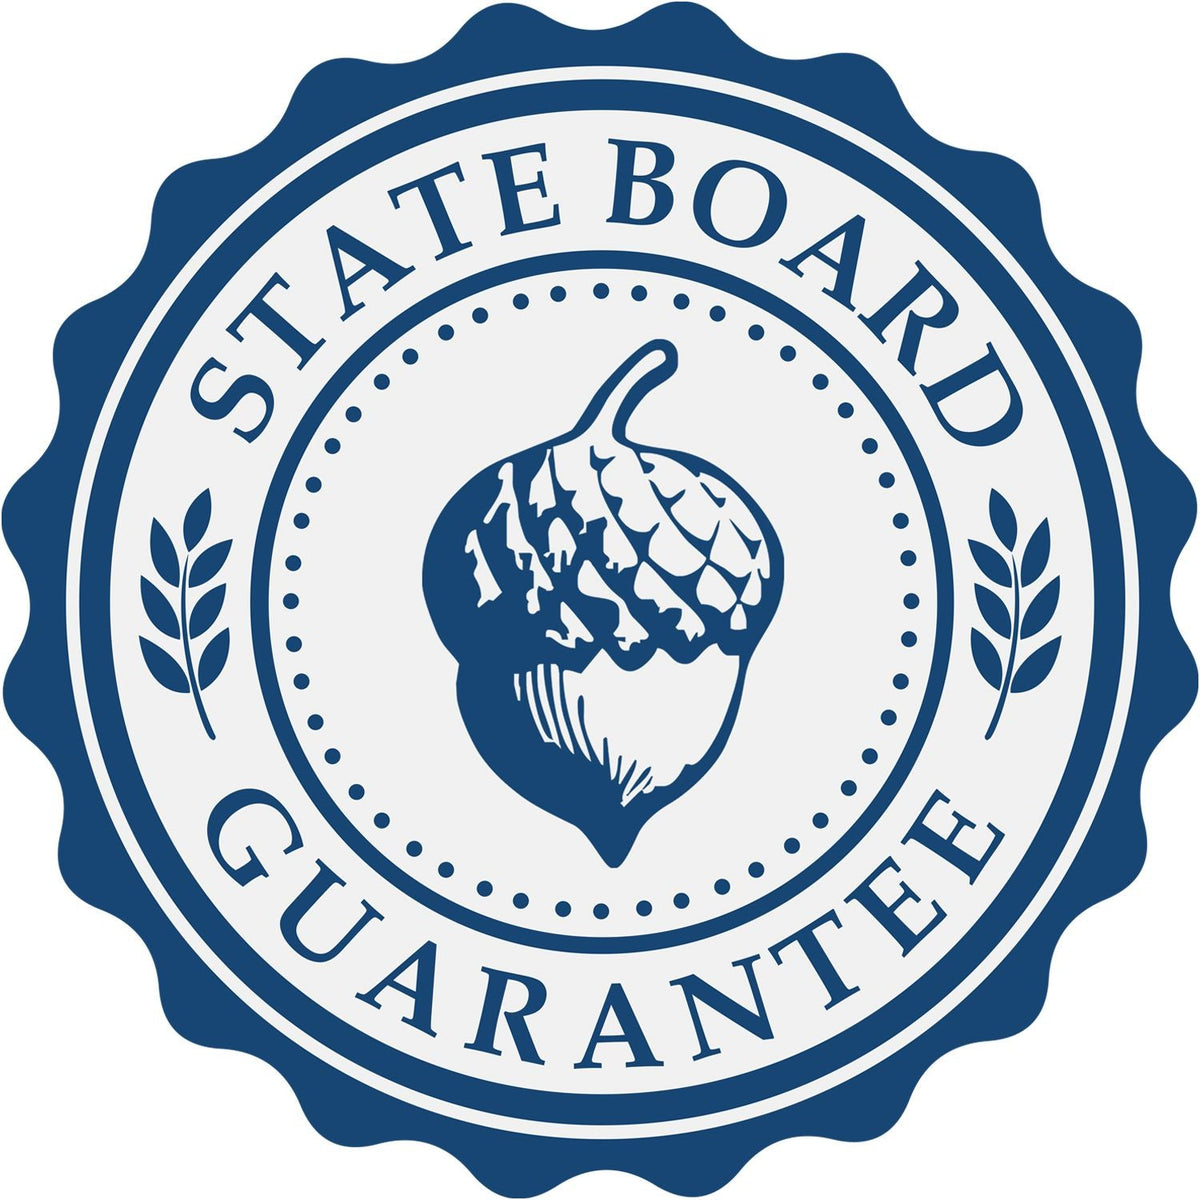 Notary Seal State Board Guarantee